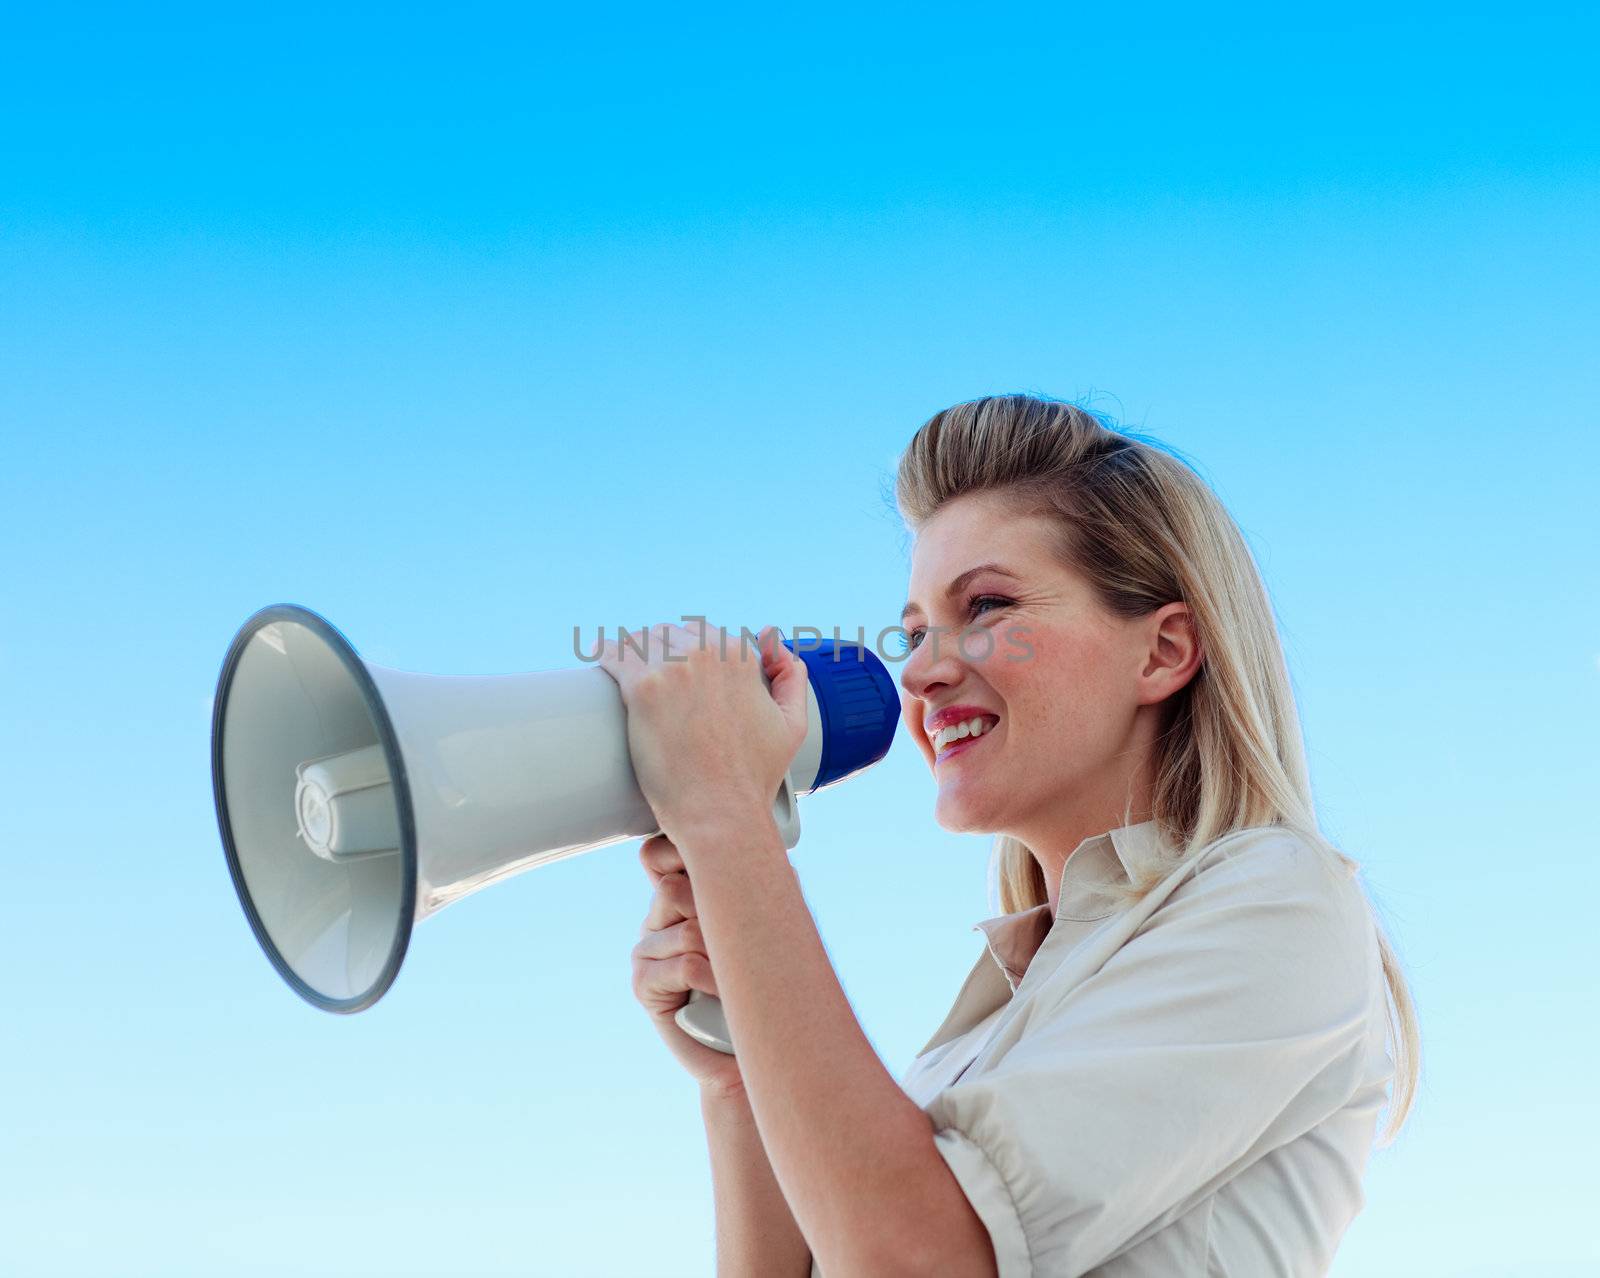 Businesswoman shouting through megaphone outdoors against blue sky